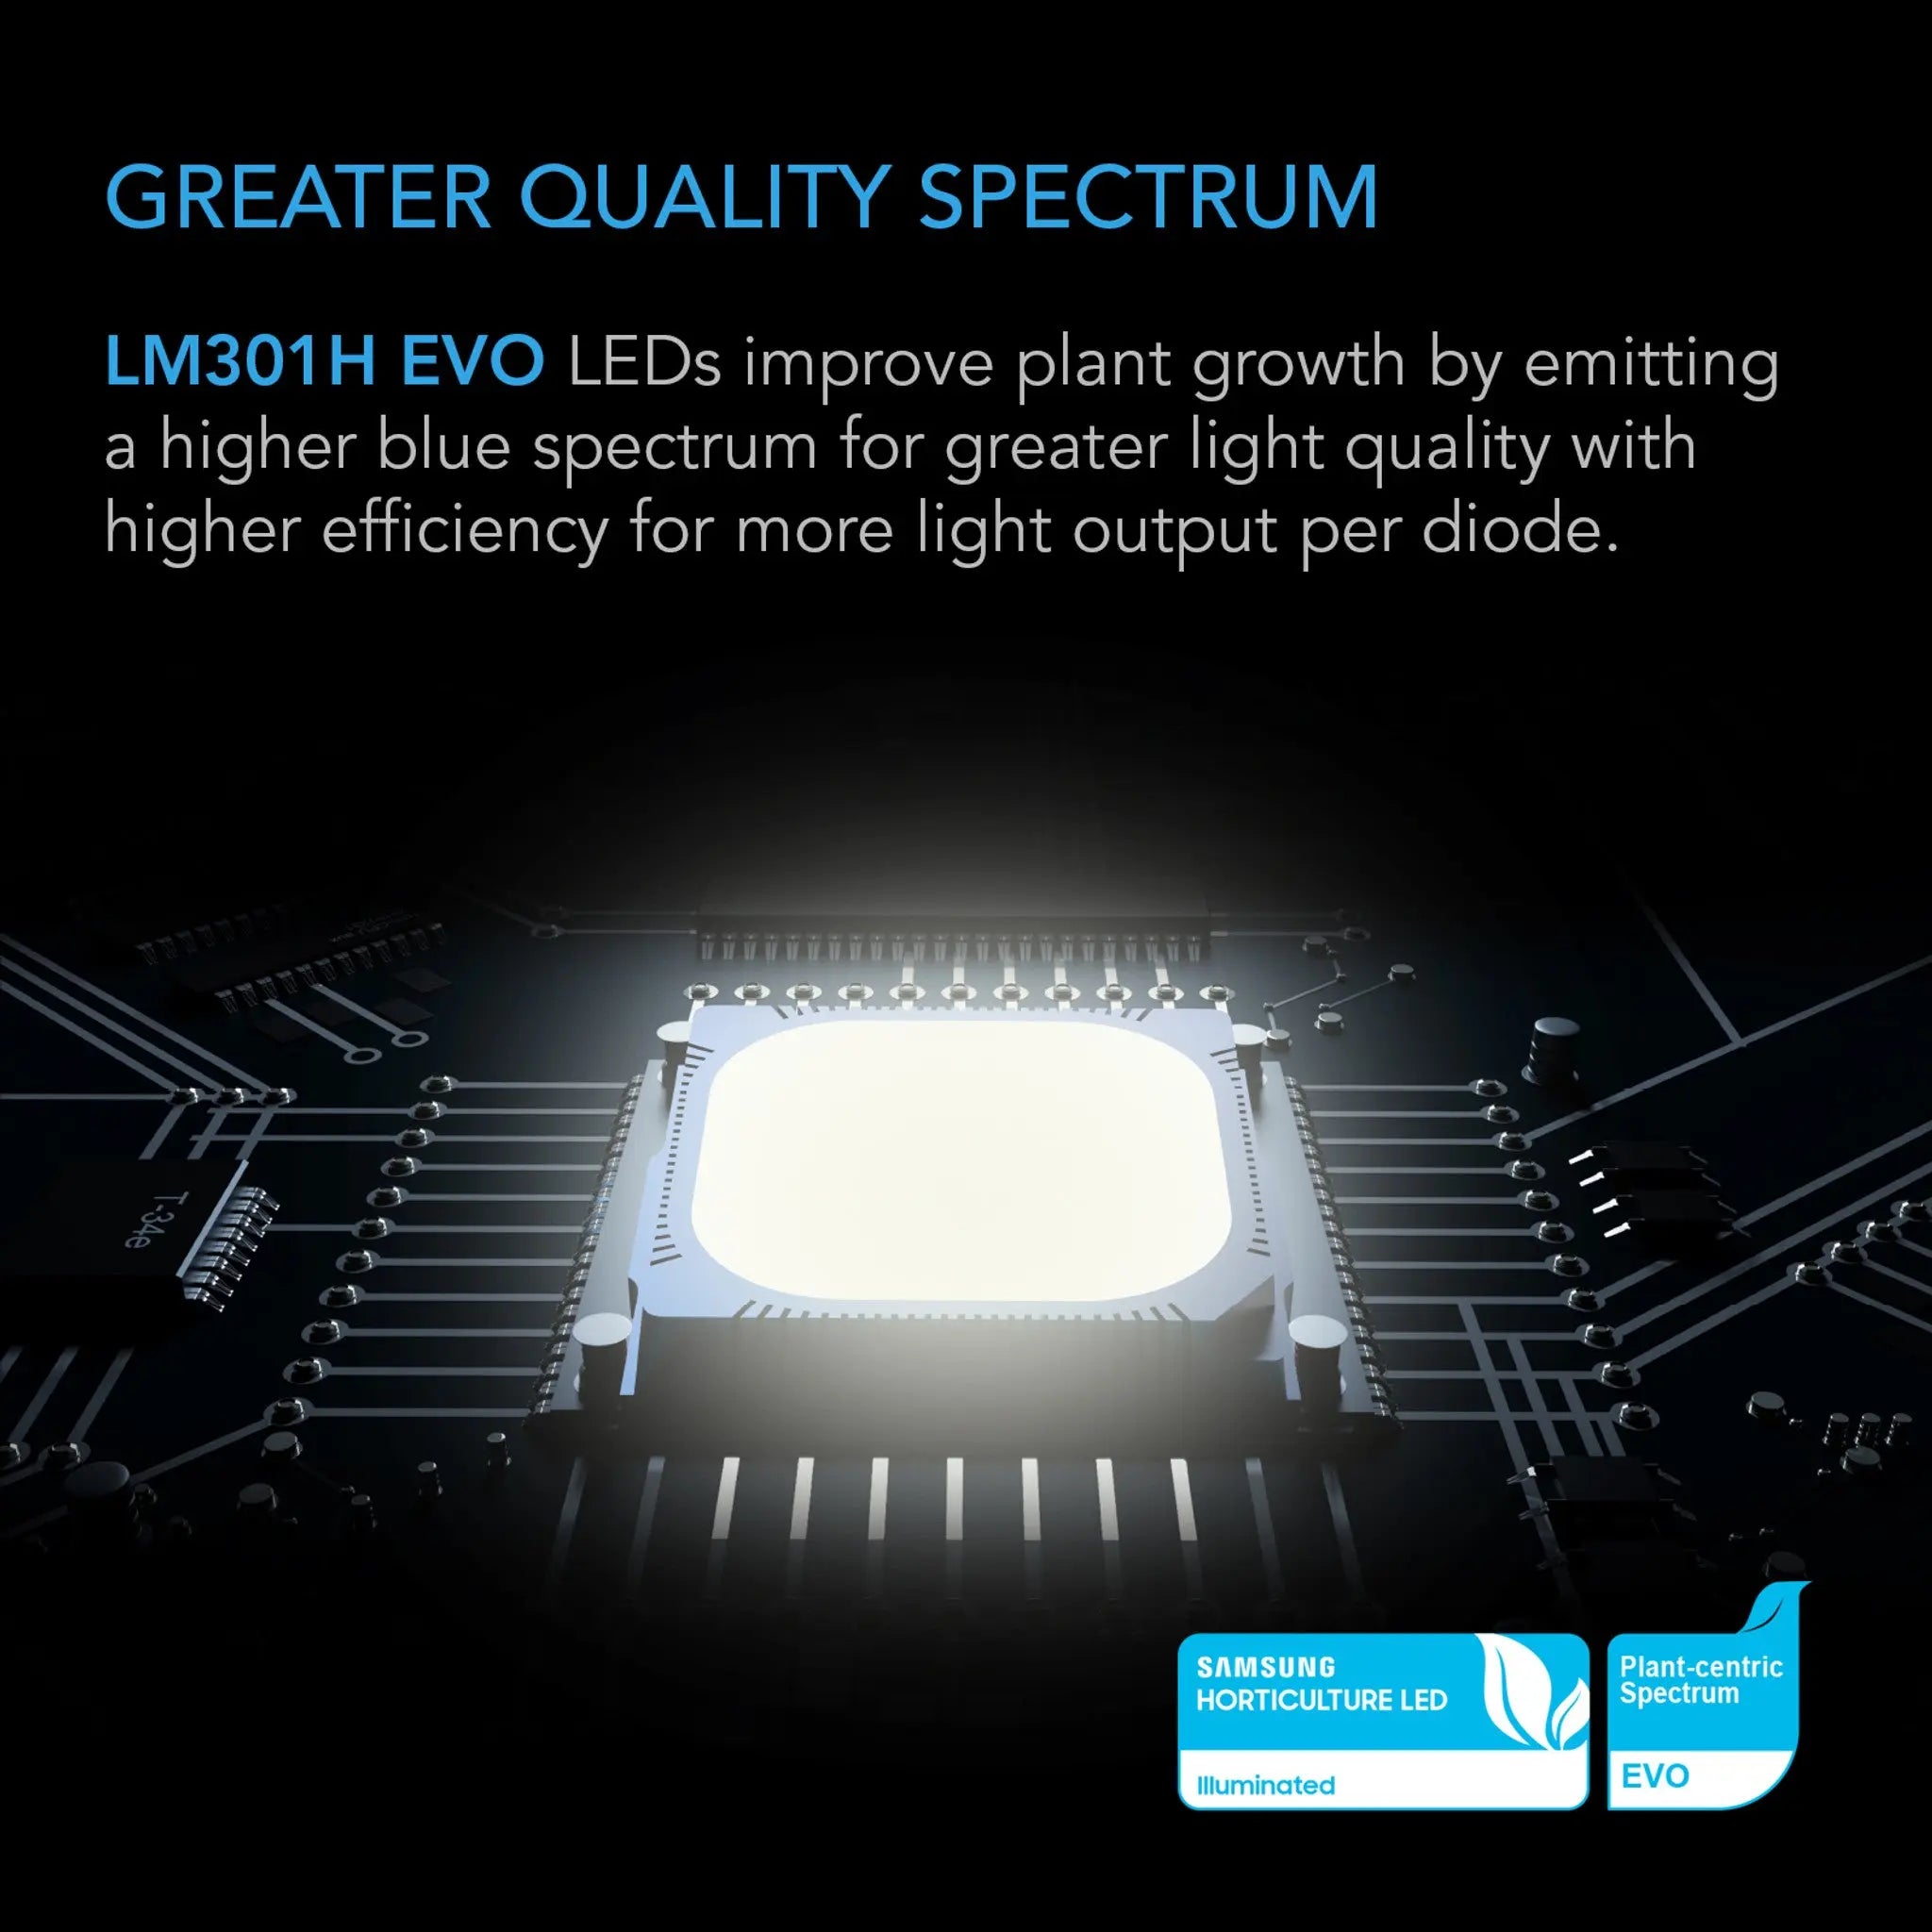 AC Infinity IONFRAME EVO10, Samsung LM301H EVO Commercial LED Grow Light 5x5’, 1000W